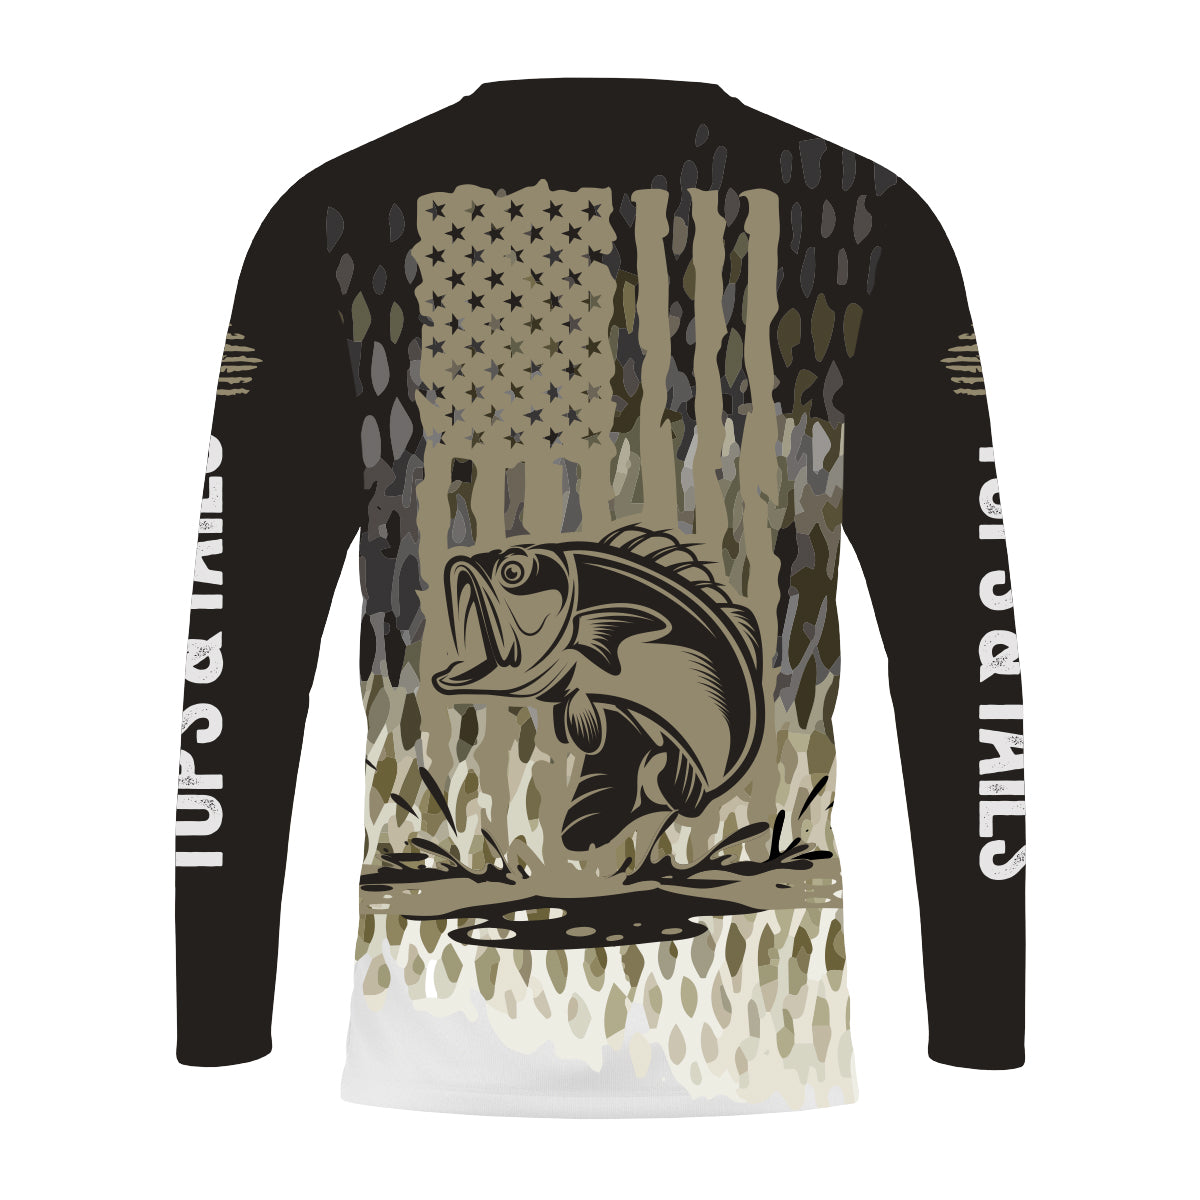 American Flag Bass Fishing Custom long sleeve Fishing Shirts for